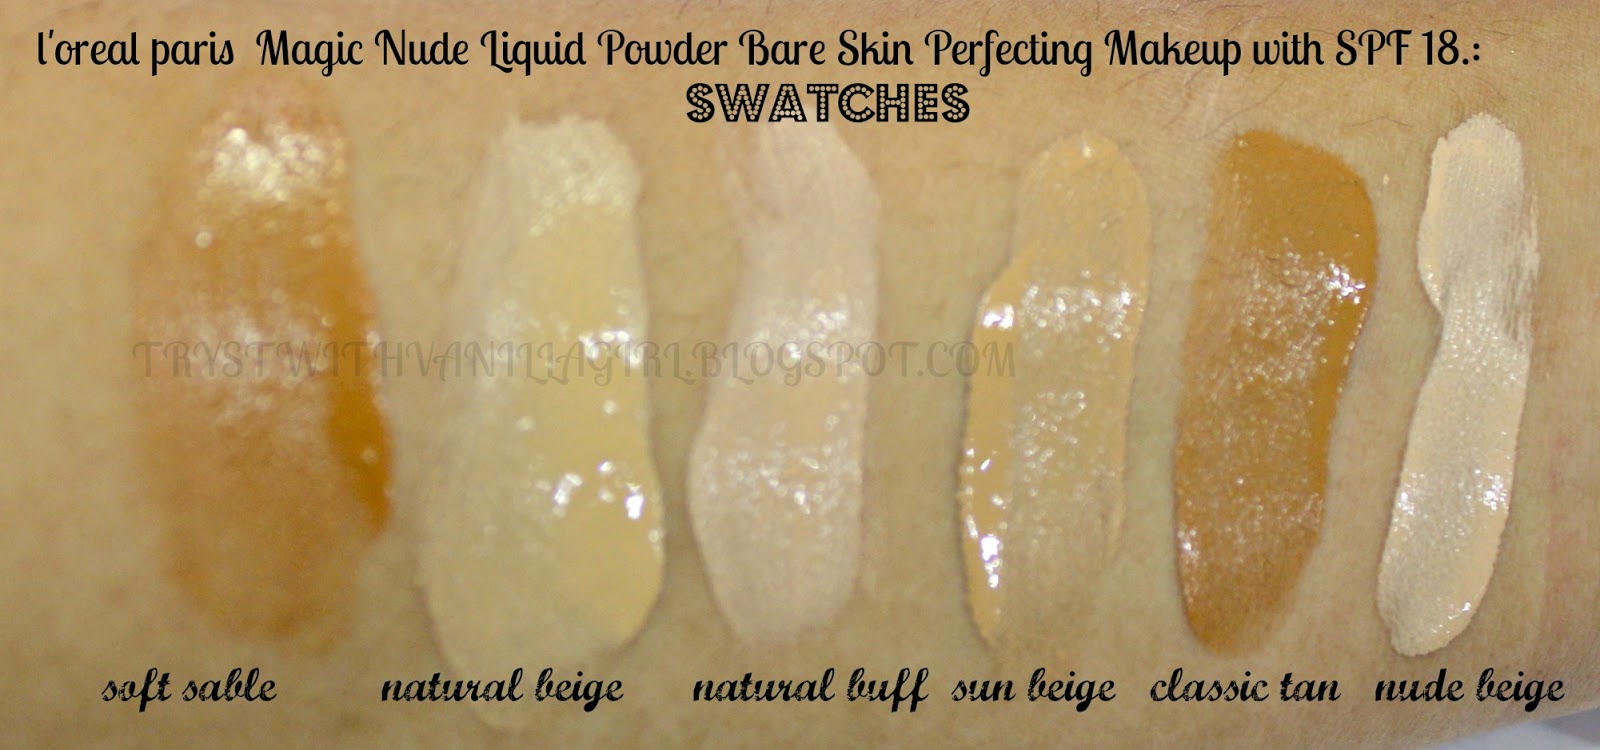 LOreal Magic Nude Liquid Powder Foundation Swatches 